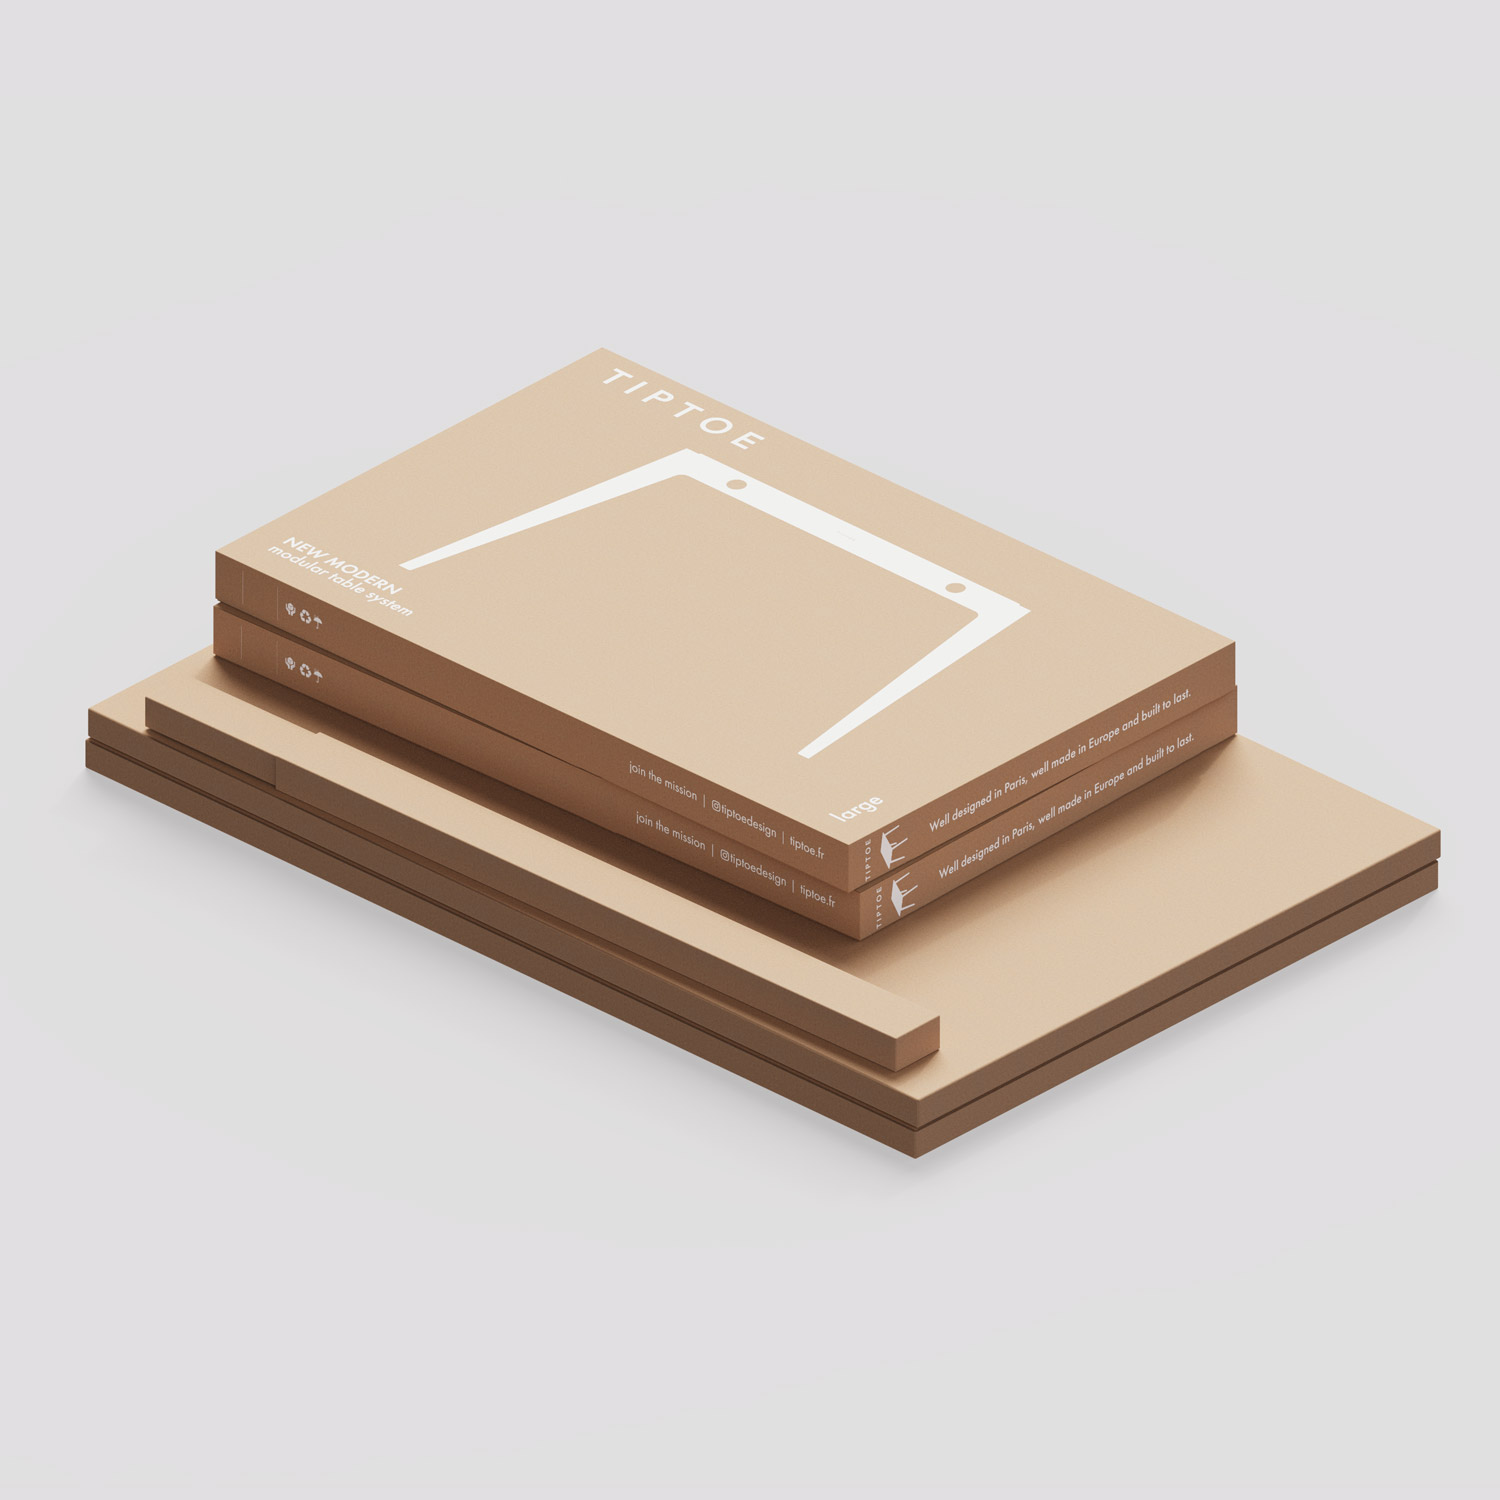 NEW MODERN 2–seater workbench – white plywood